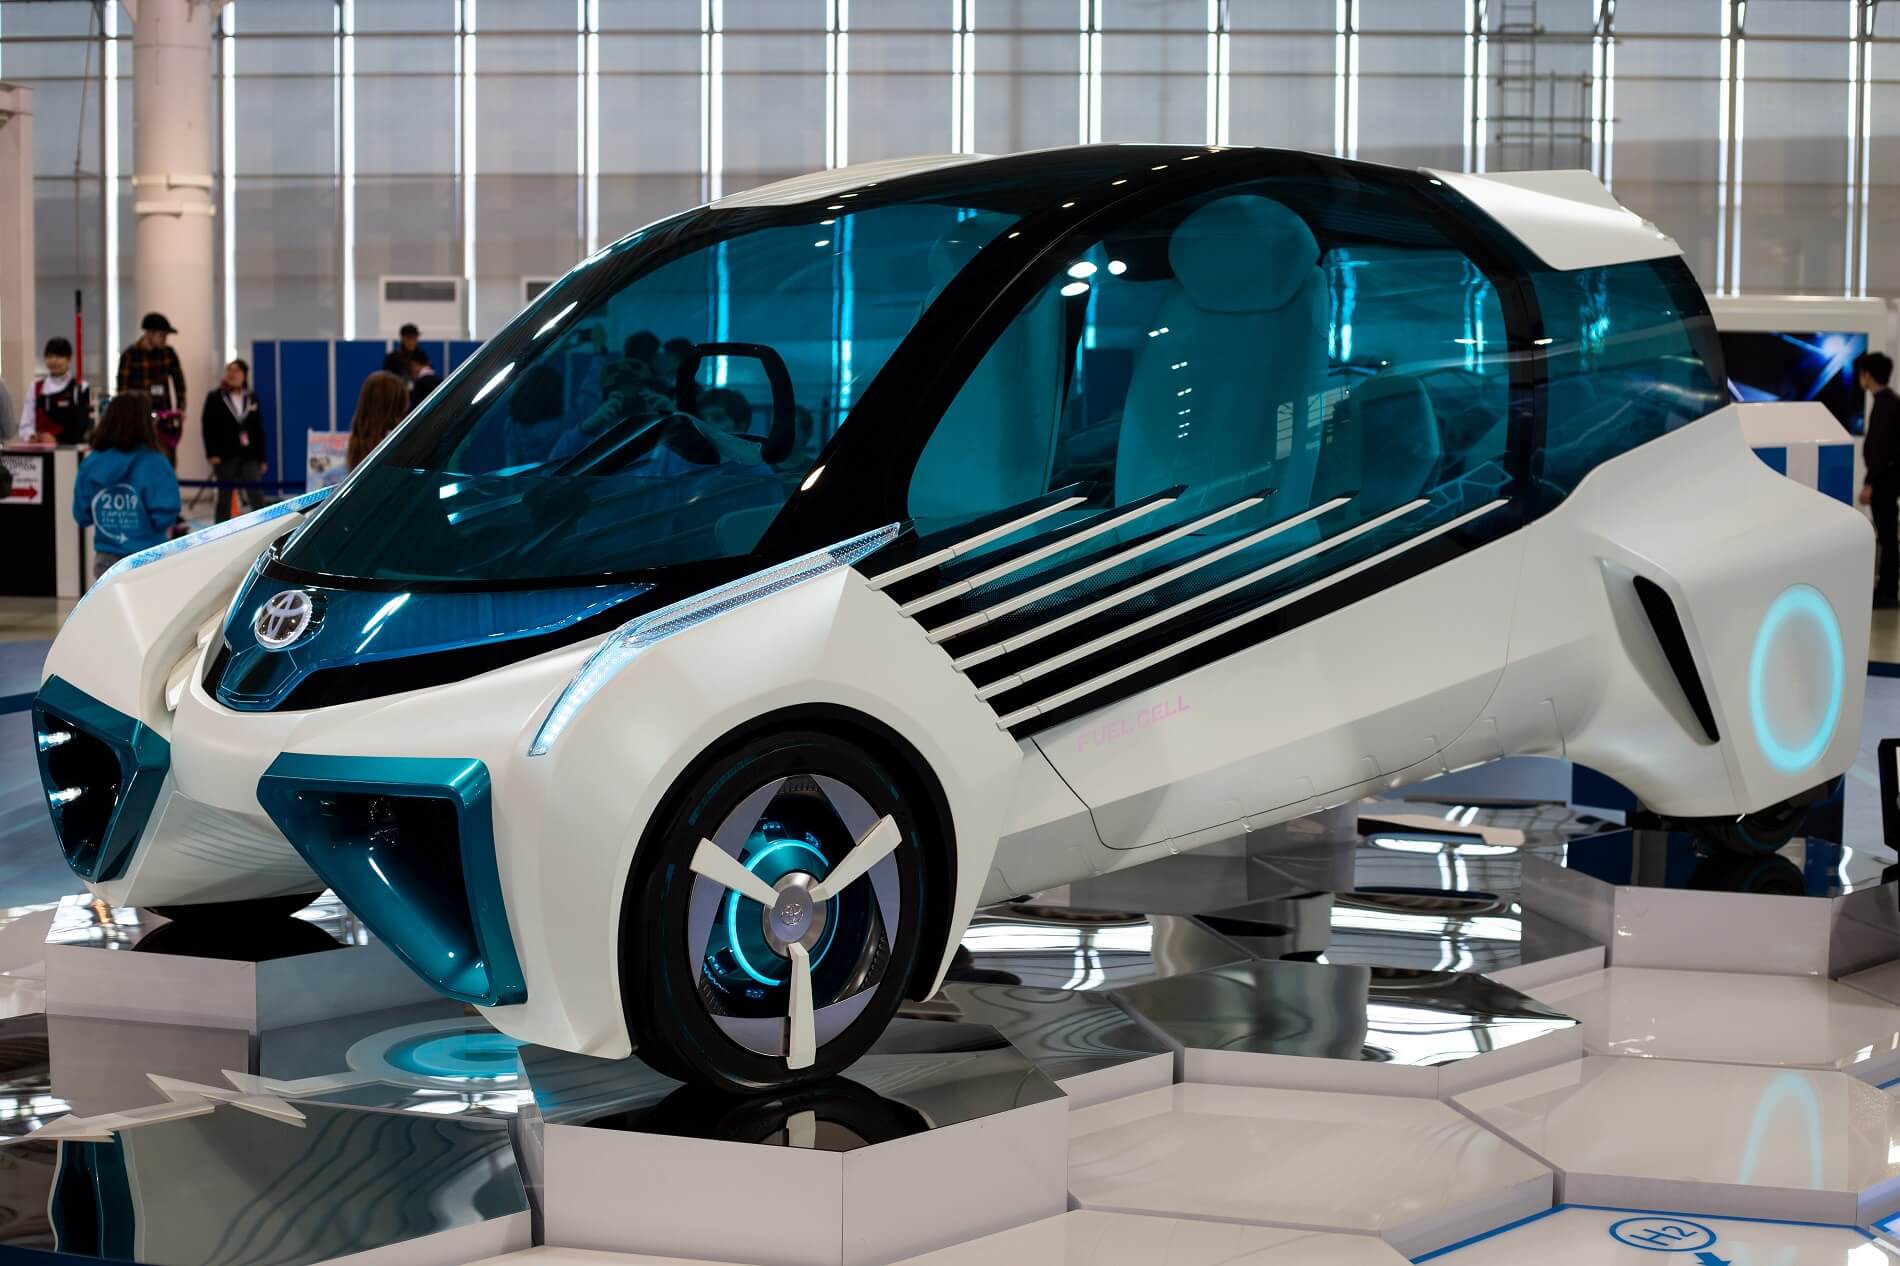 Car of the future at a trade fair